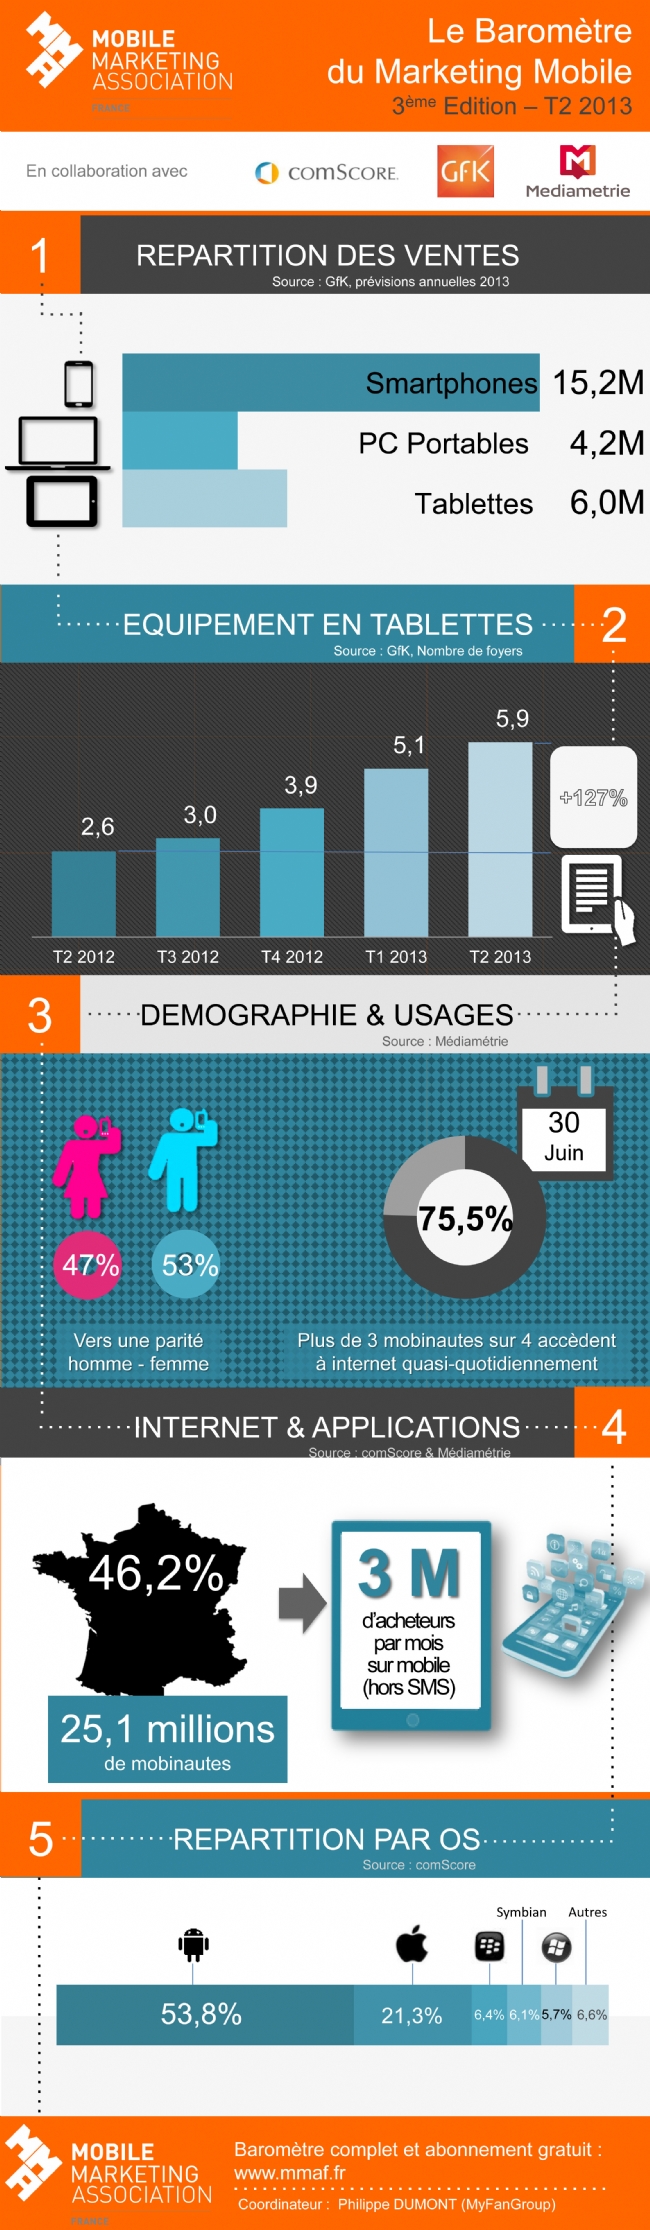 Barometre-marketing-mobile-resultats-deuxieme-trimestre-2013-F